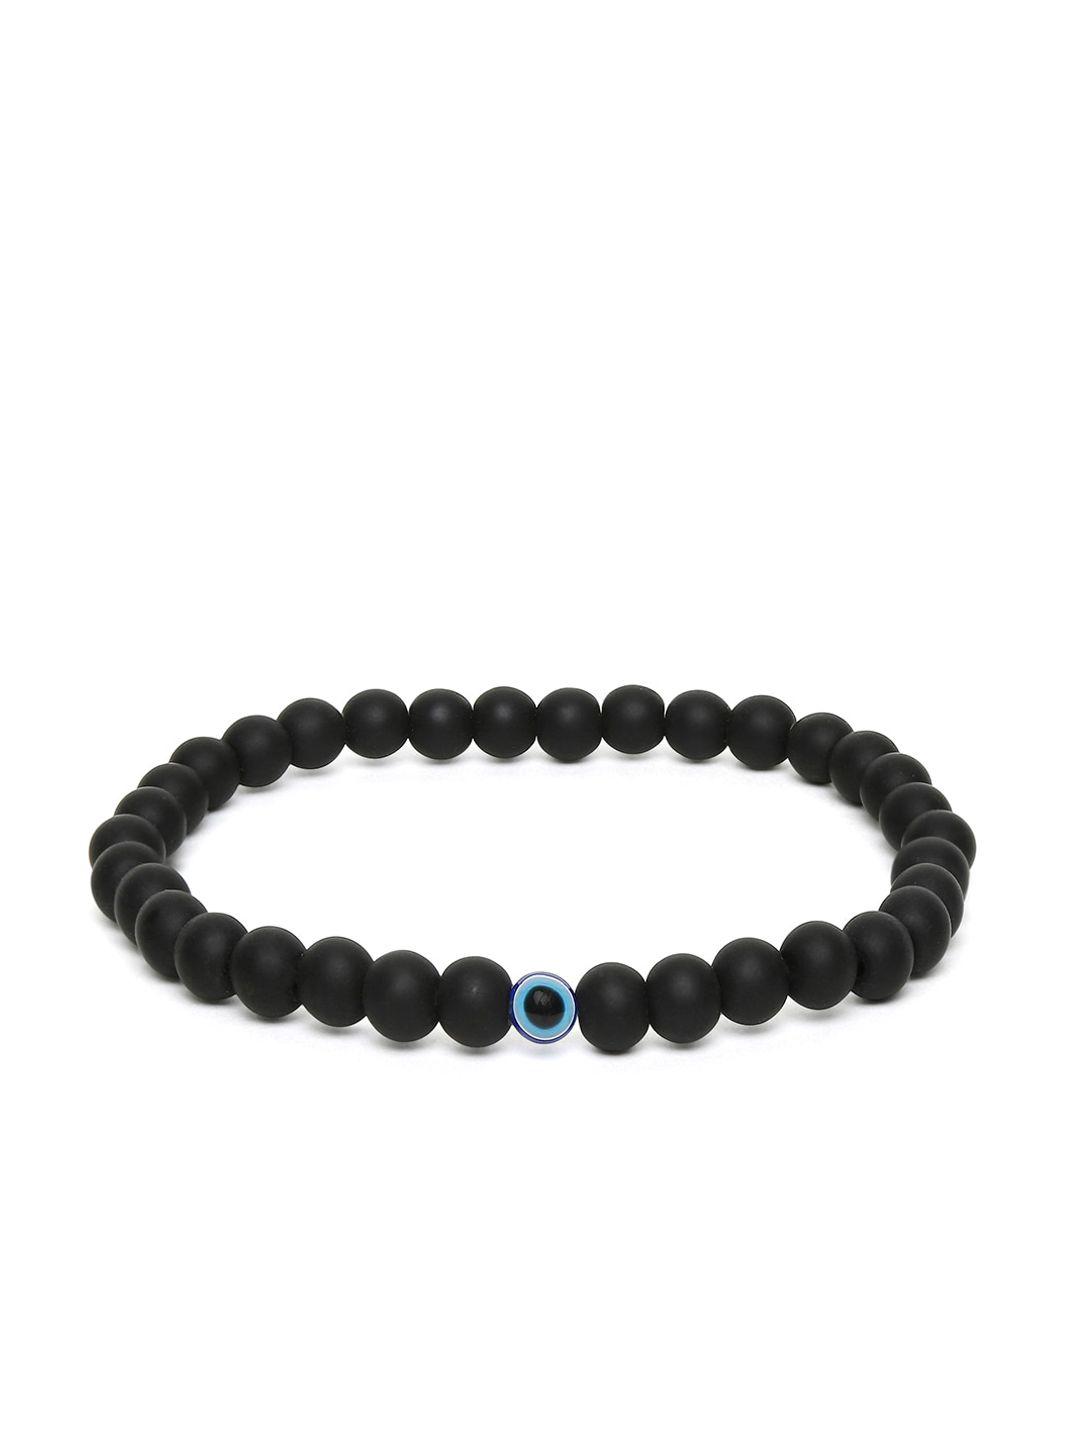 oomph men black & blue goodluck evil eye beads plastic handcrafted elasticated bracelet